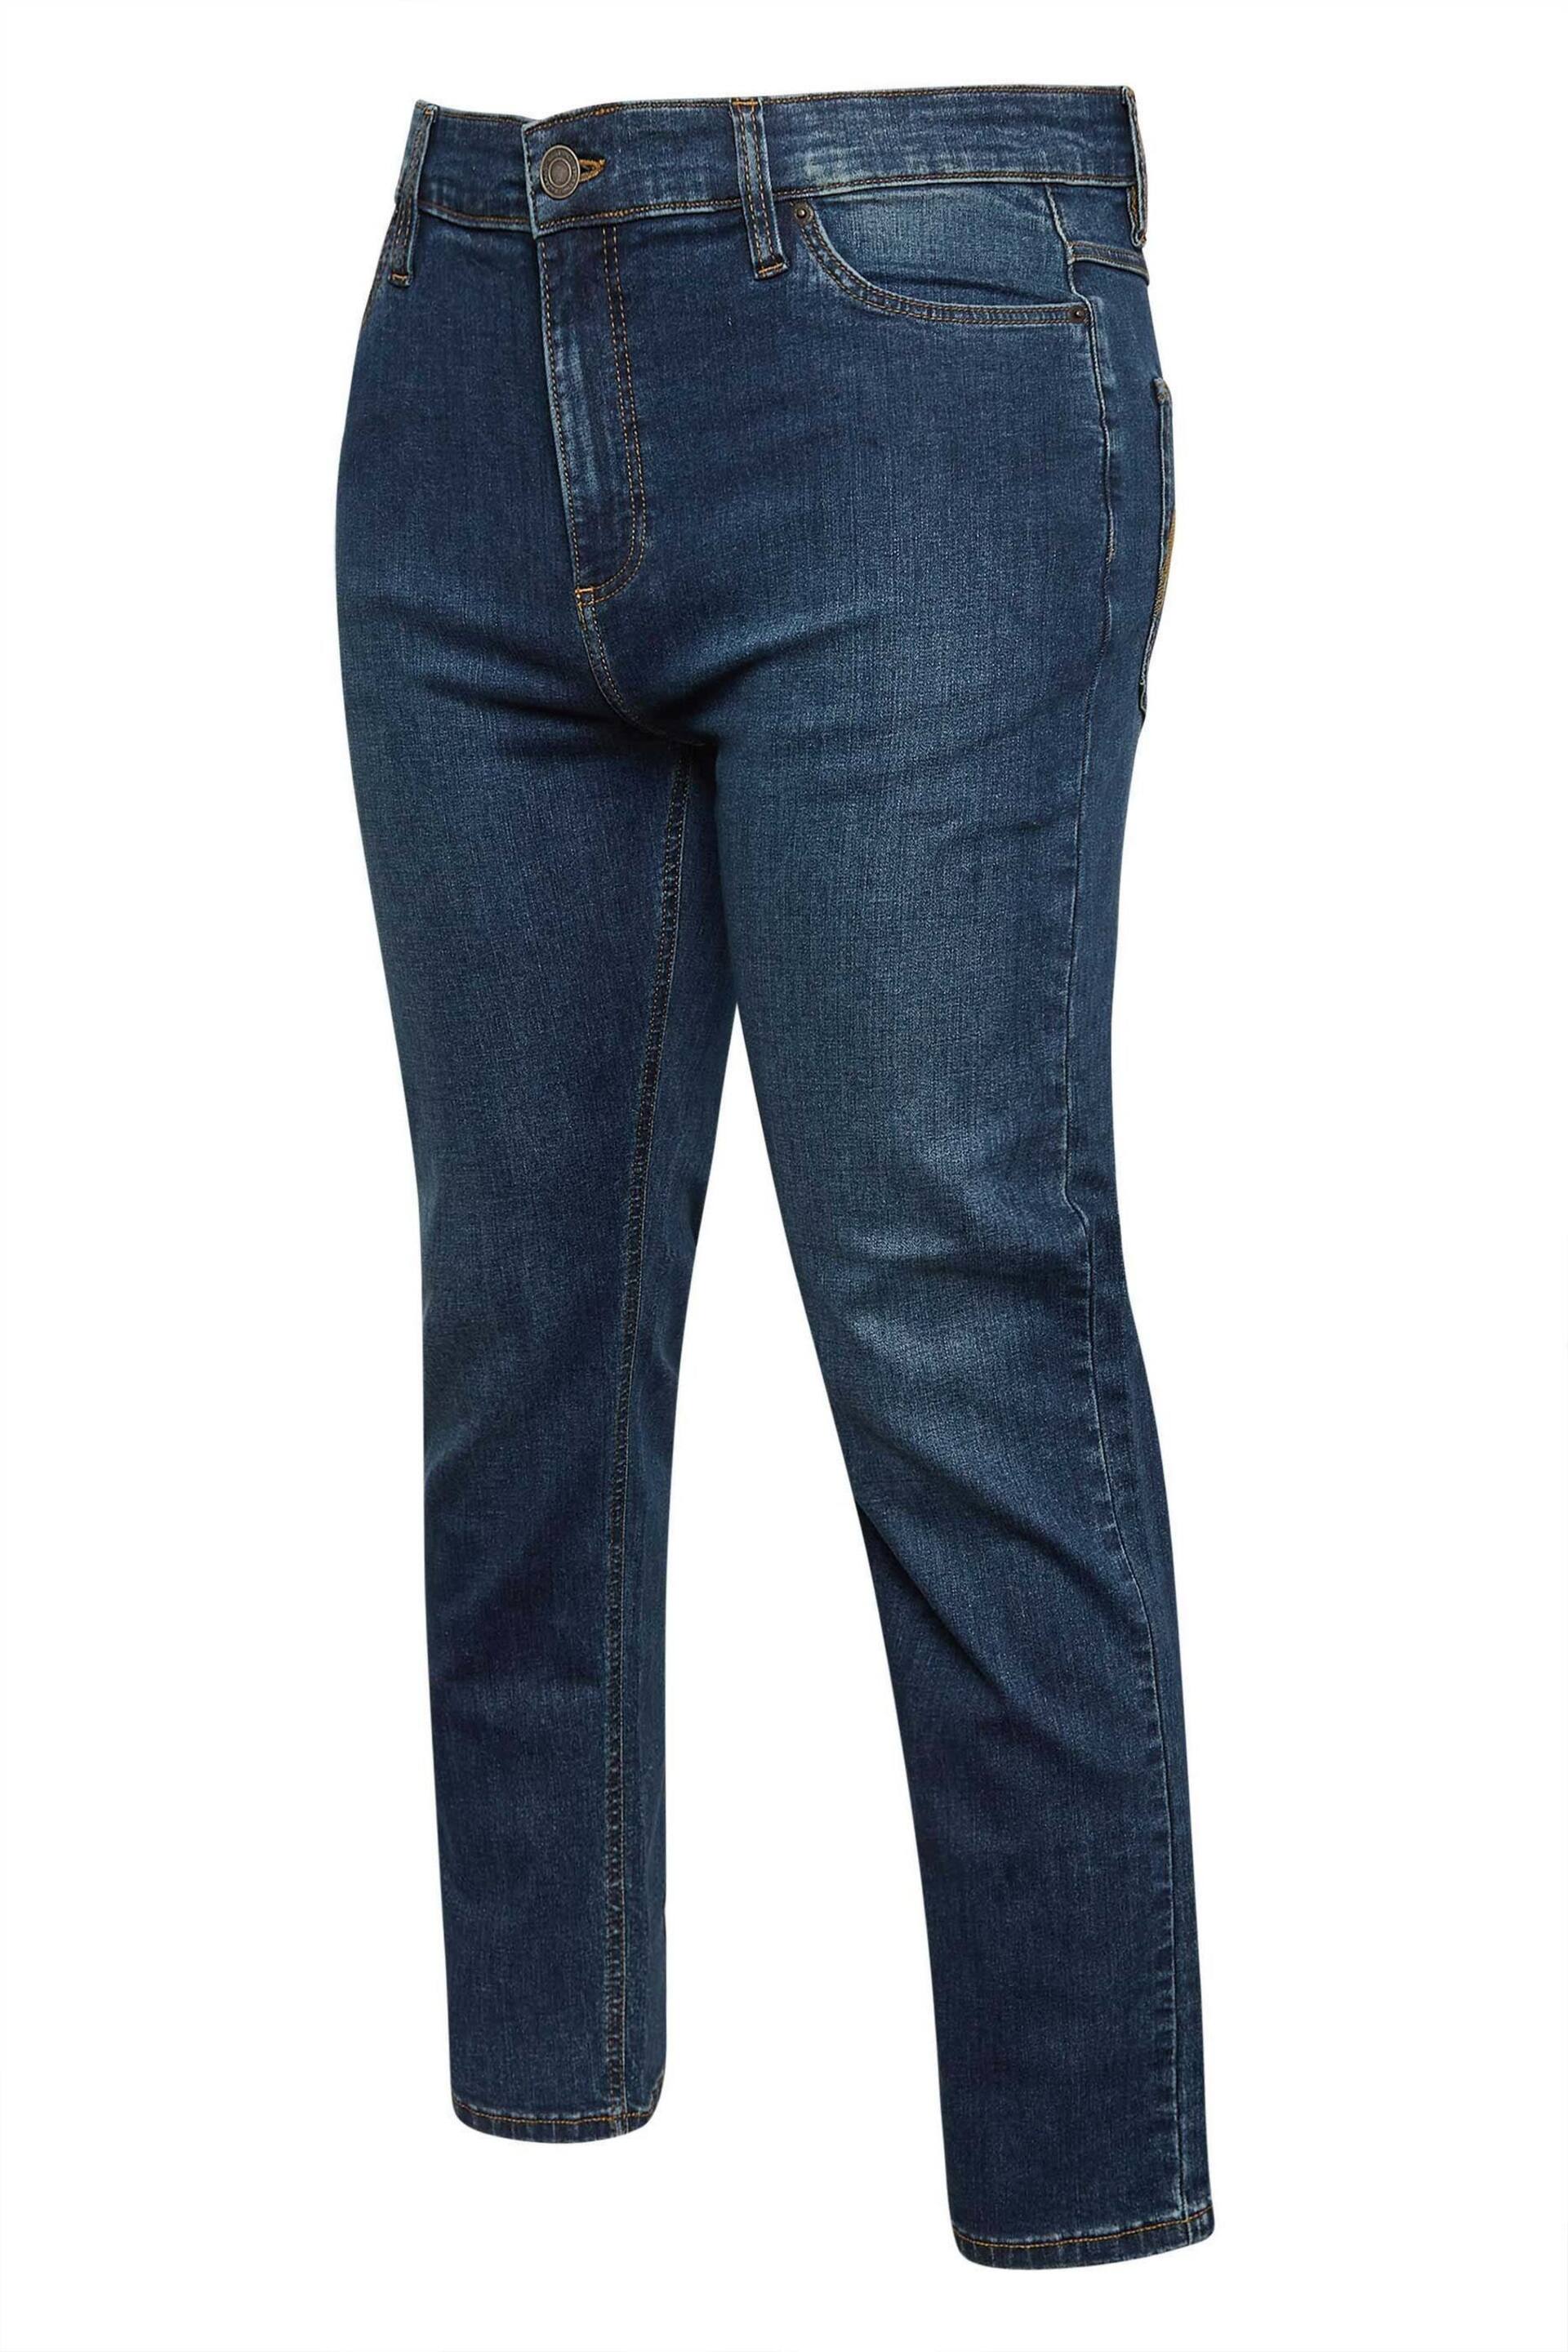 BadRhino Big & Tall Blue Stretch Leg Jeans - Image 5 of 5